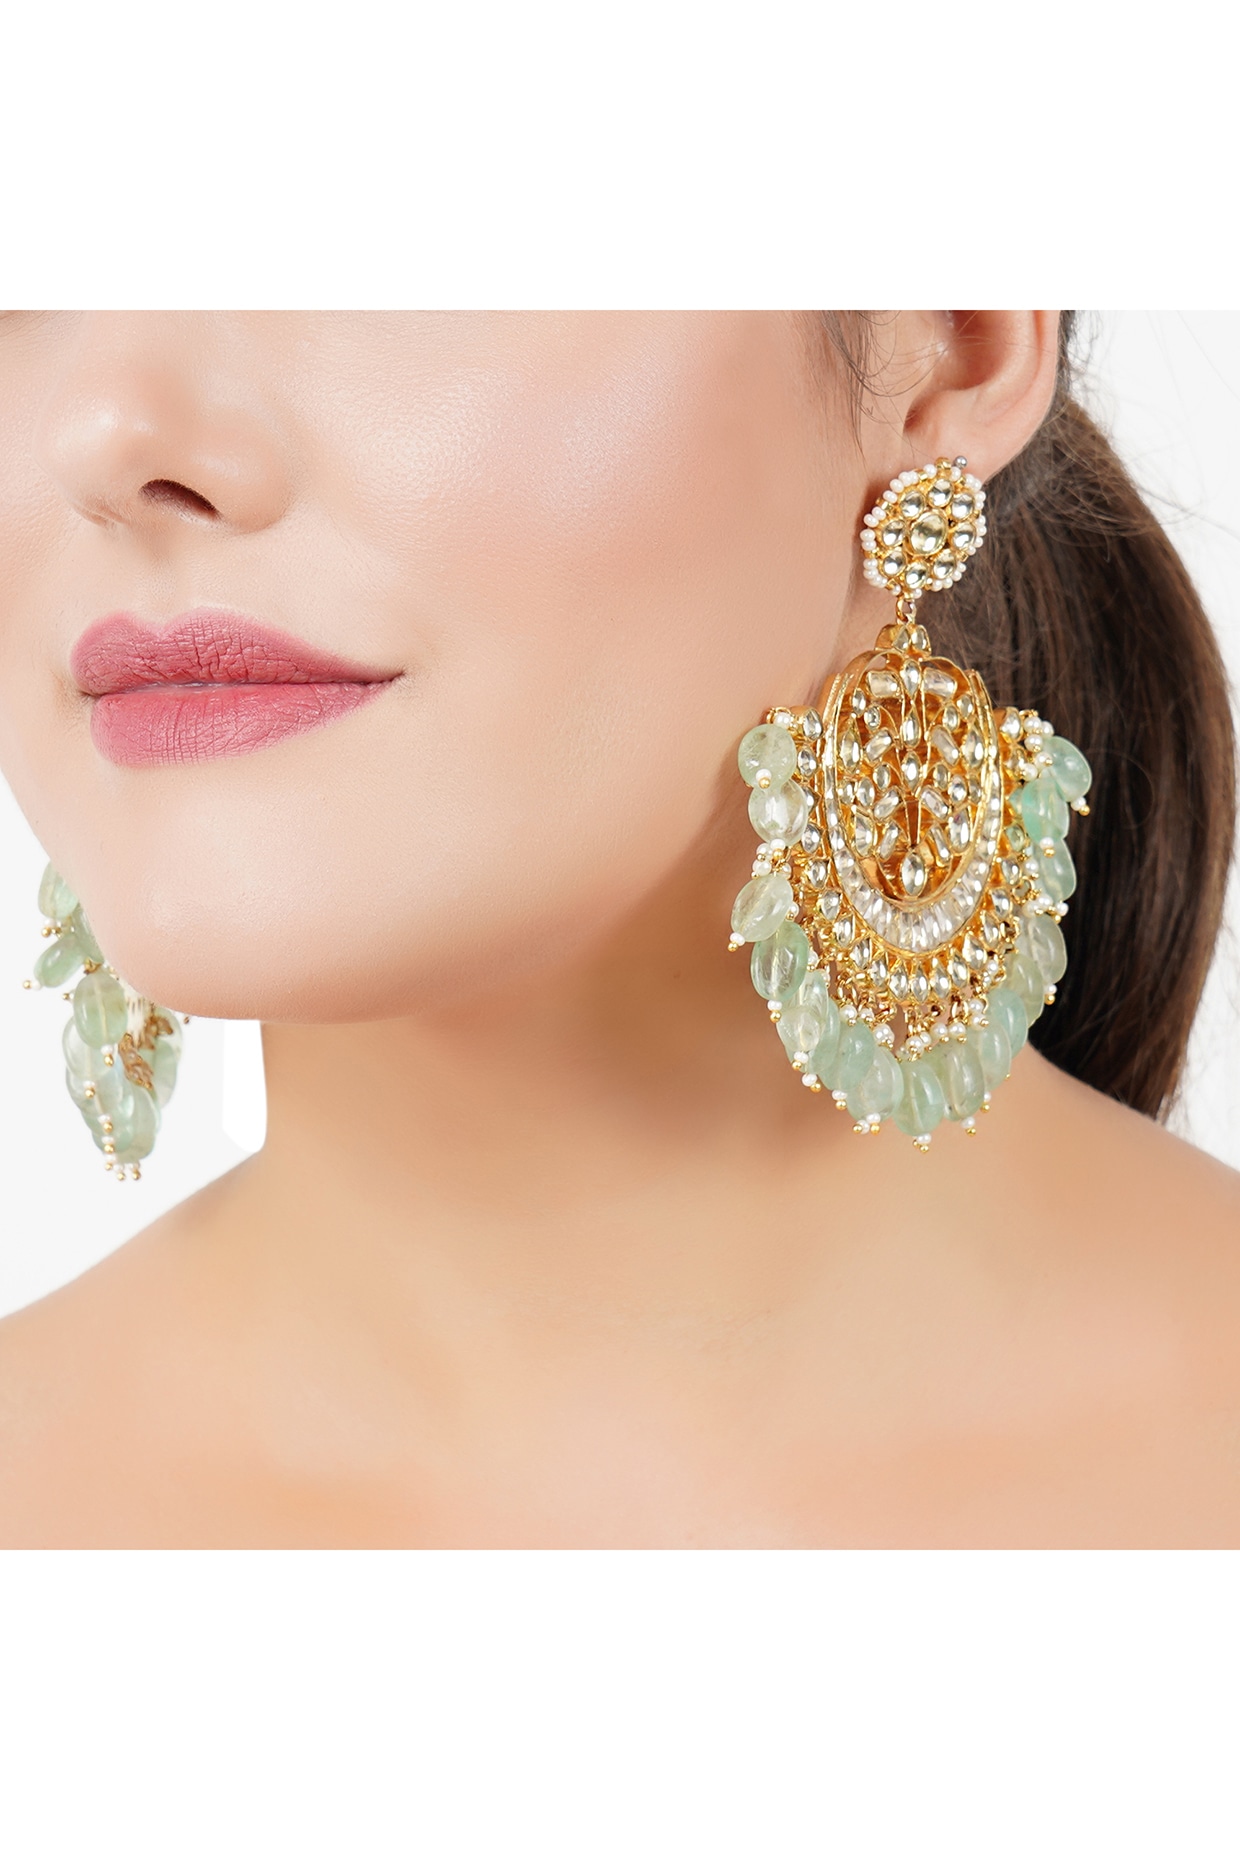 Agrani earrings – Phuljhadi